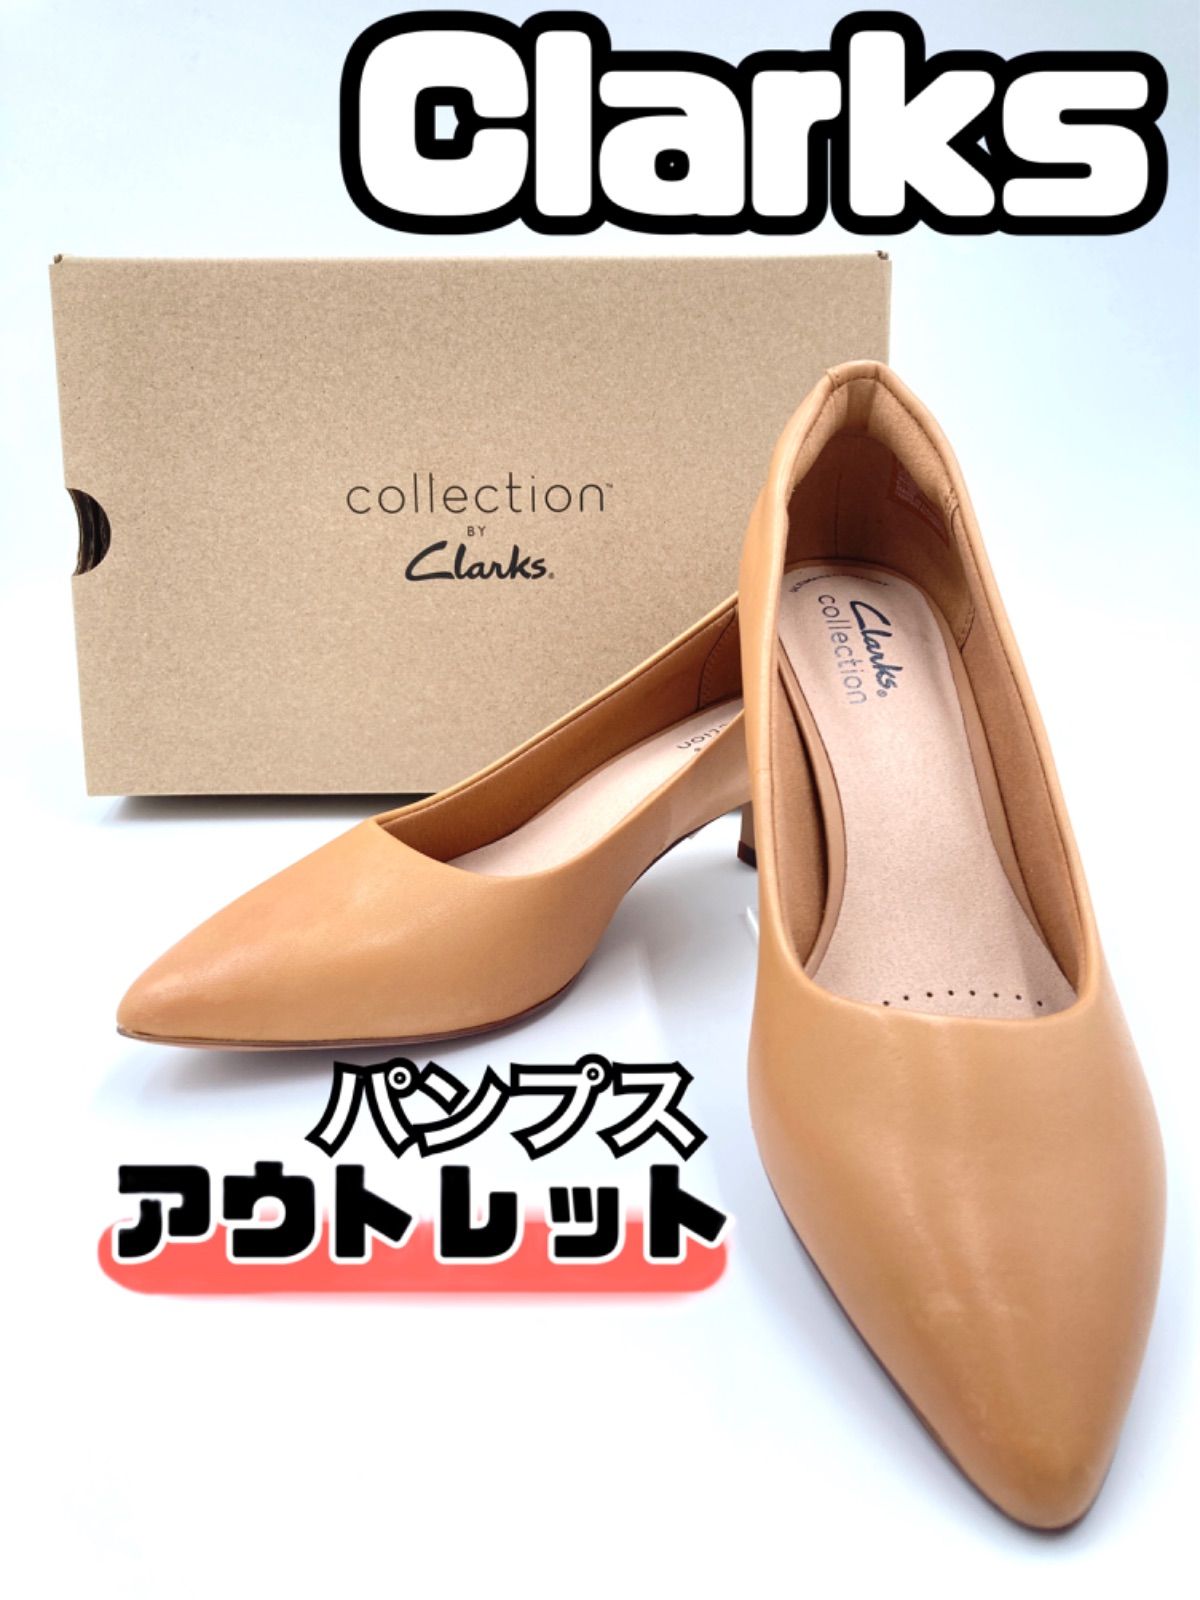 235)Clarksクラークス パンプス 革靴 レディース 23cm 37